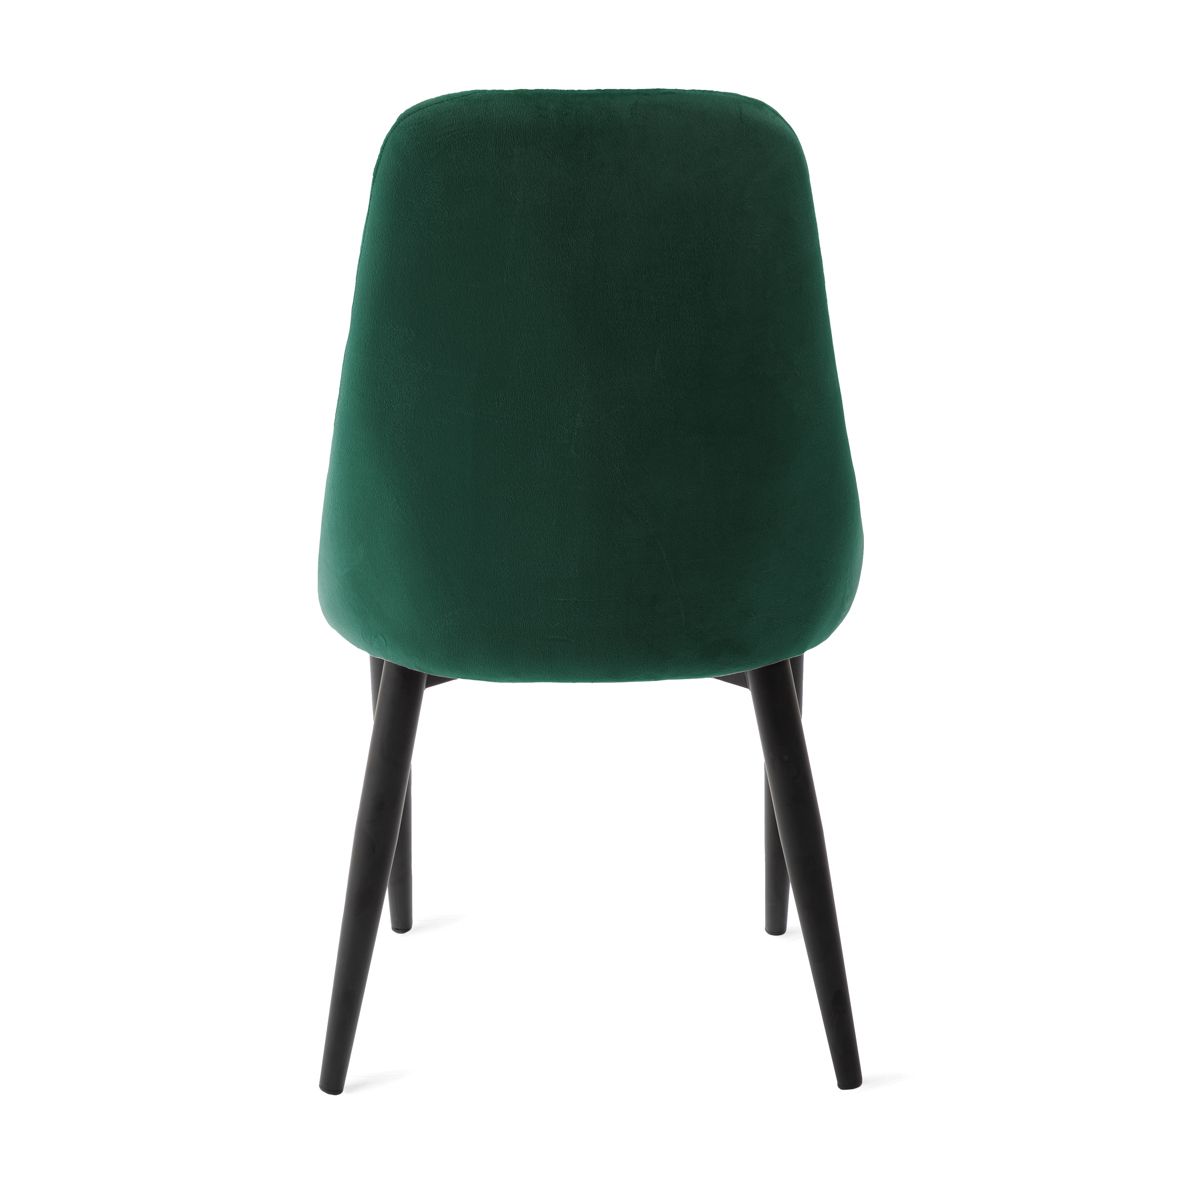 LOUIS QUILTER zaļš samta krēsls 44x59x88 cm